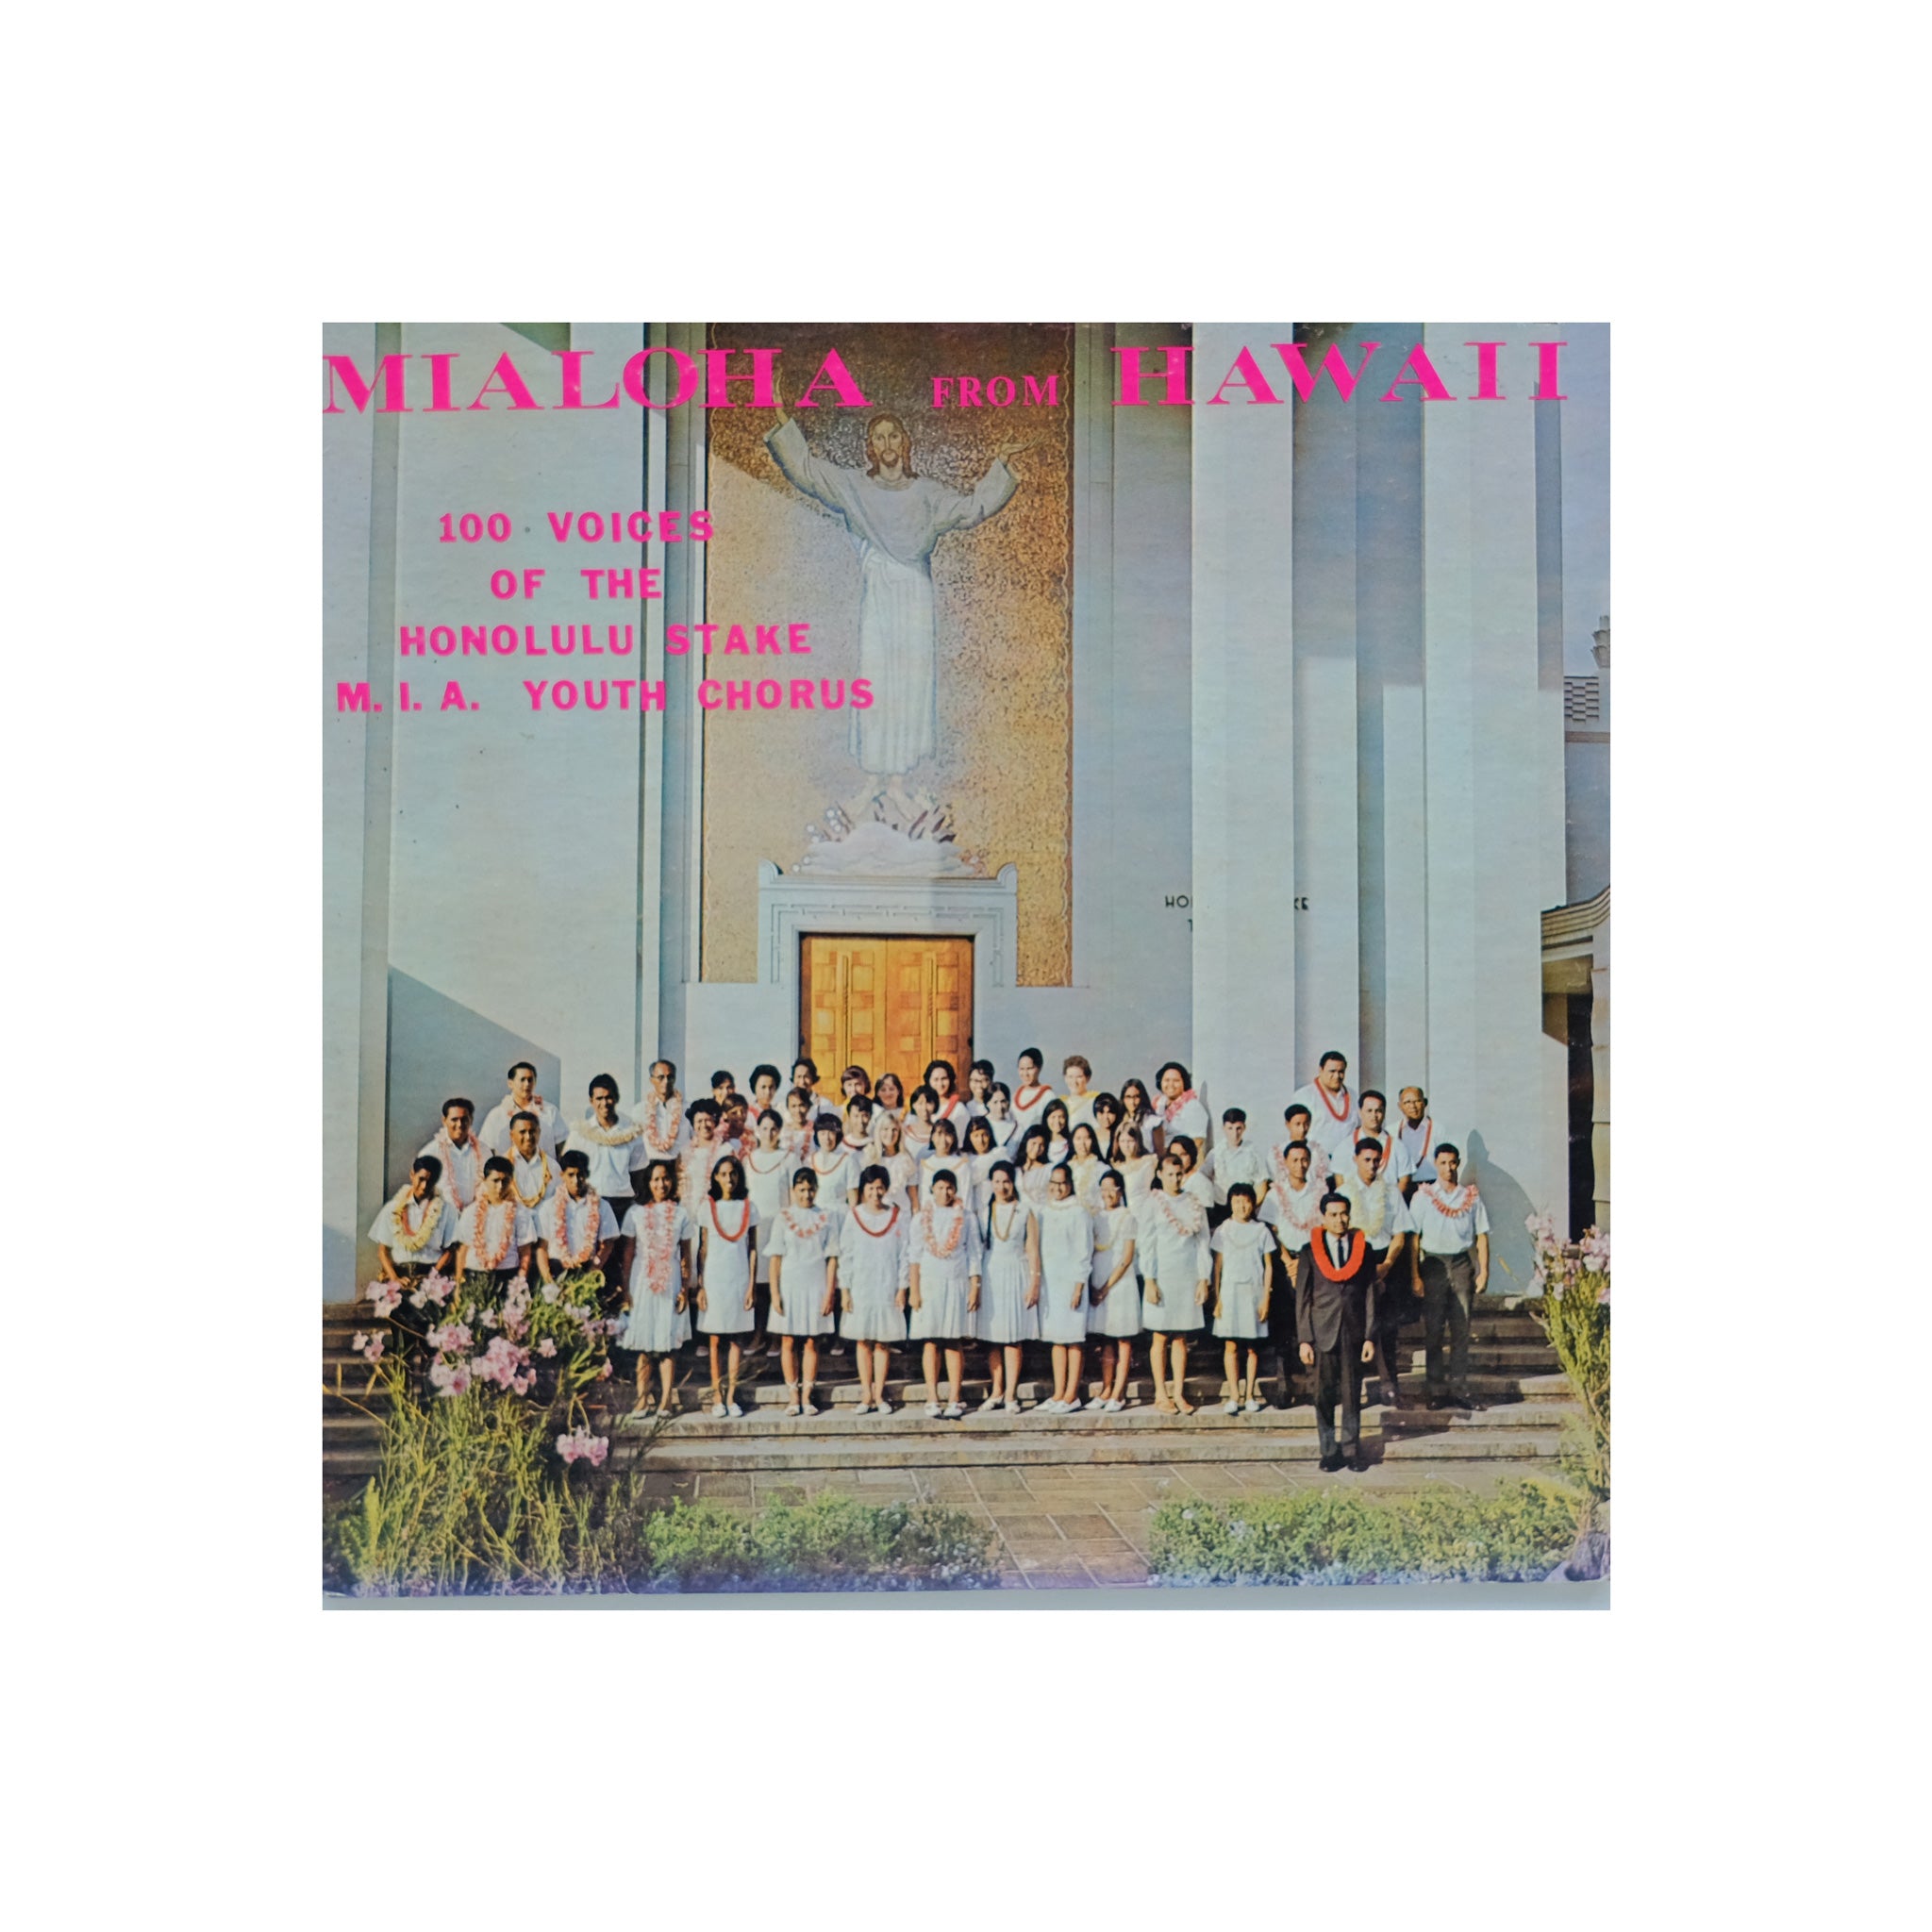 Mia Youth Chorus of the Honolulu Stake Church